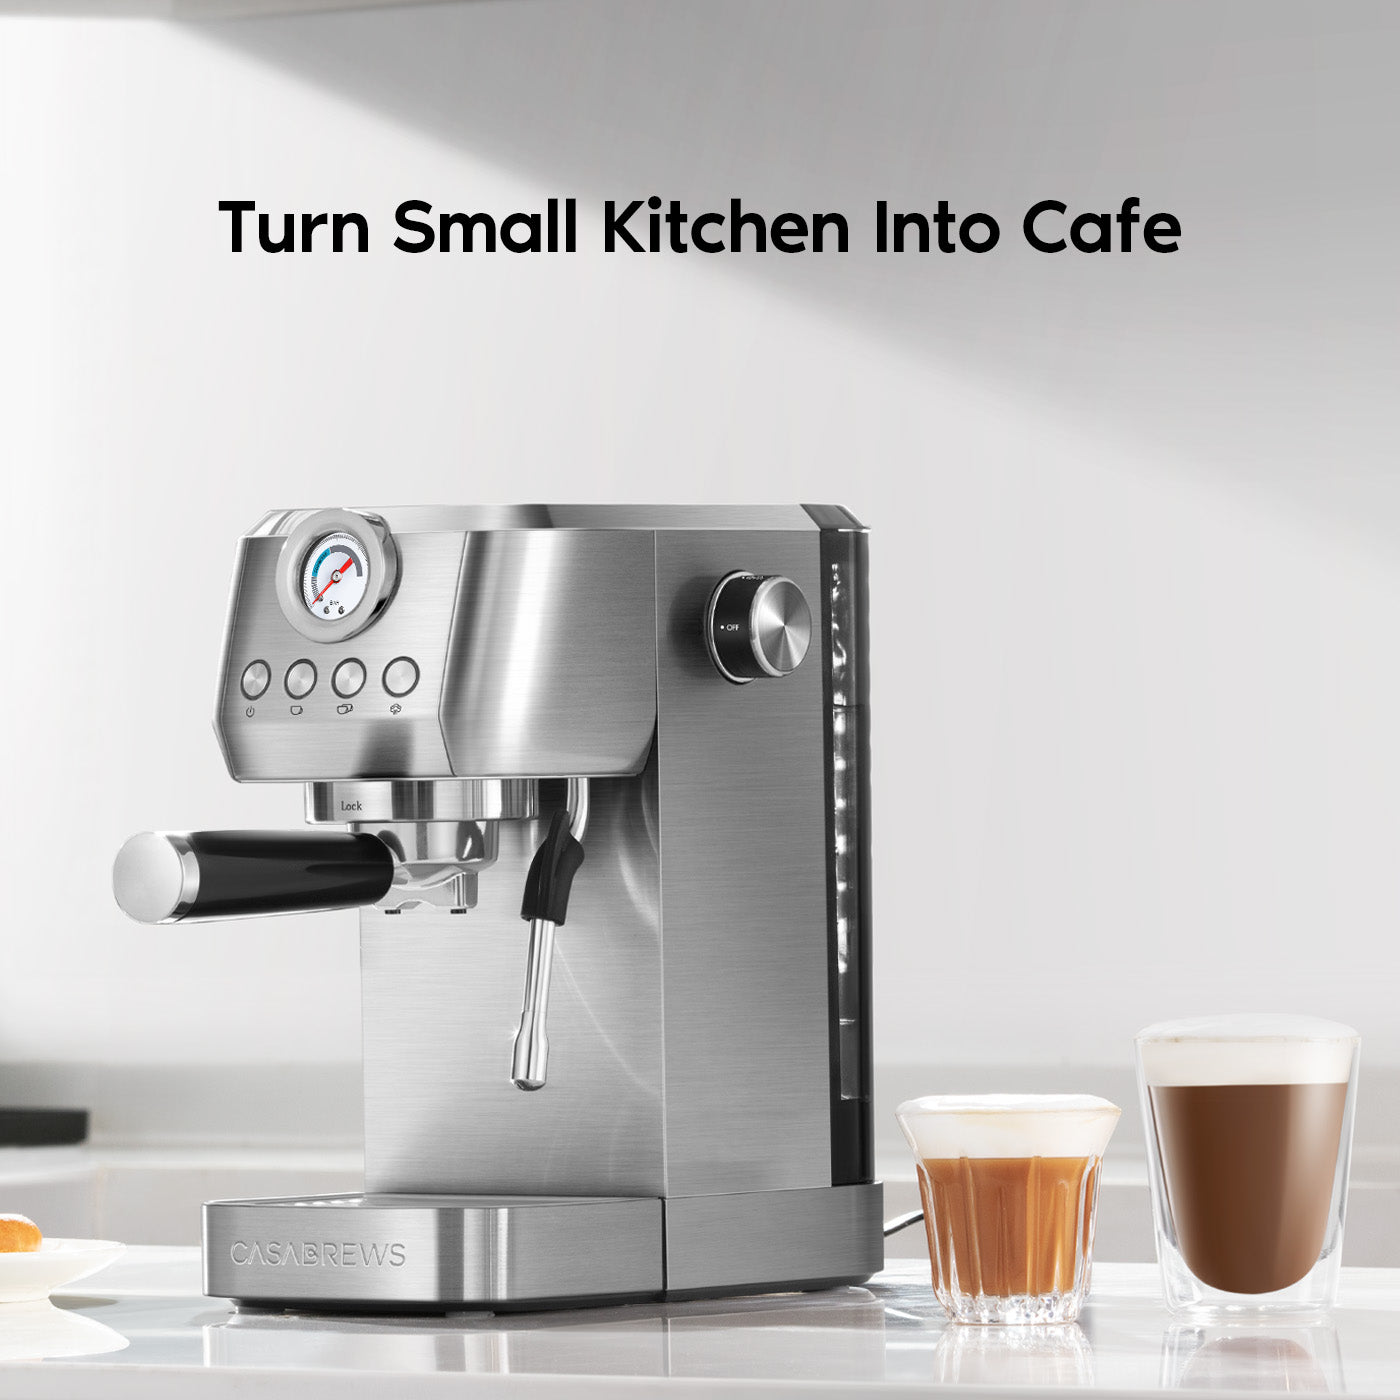 CASABREWS 3700GENSE™ 20-bar Espresso Coffee Machine with Powerful Steam Wand